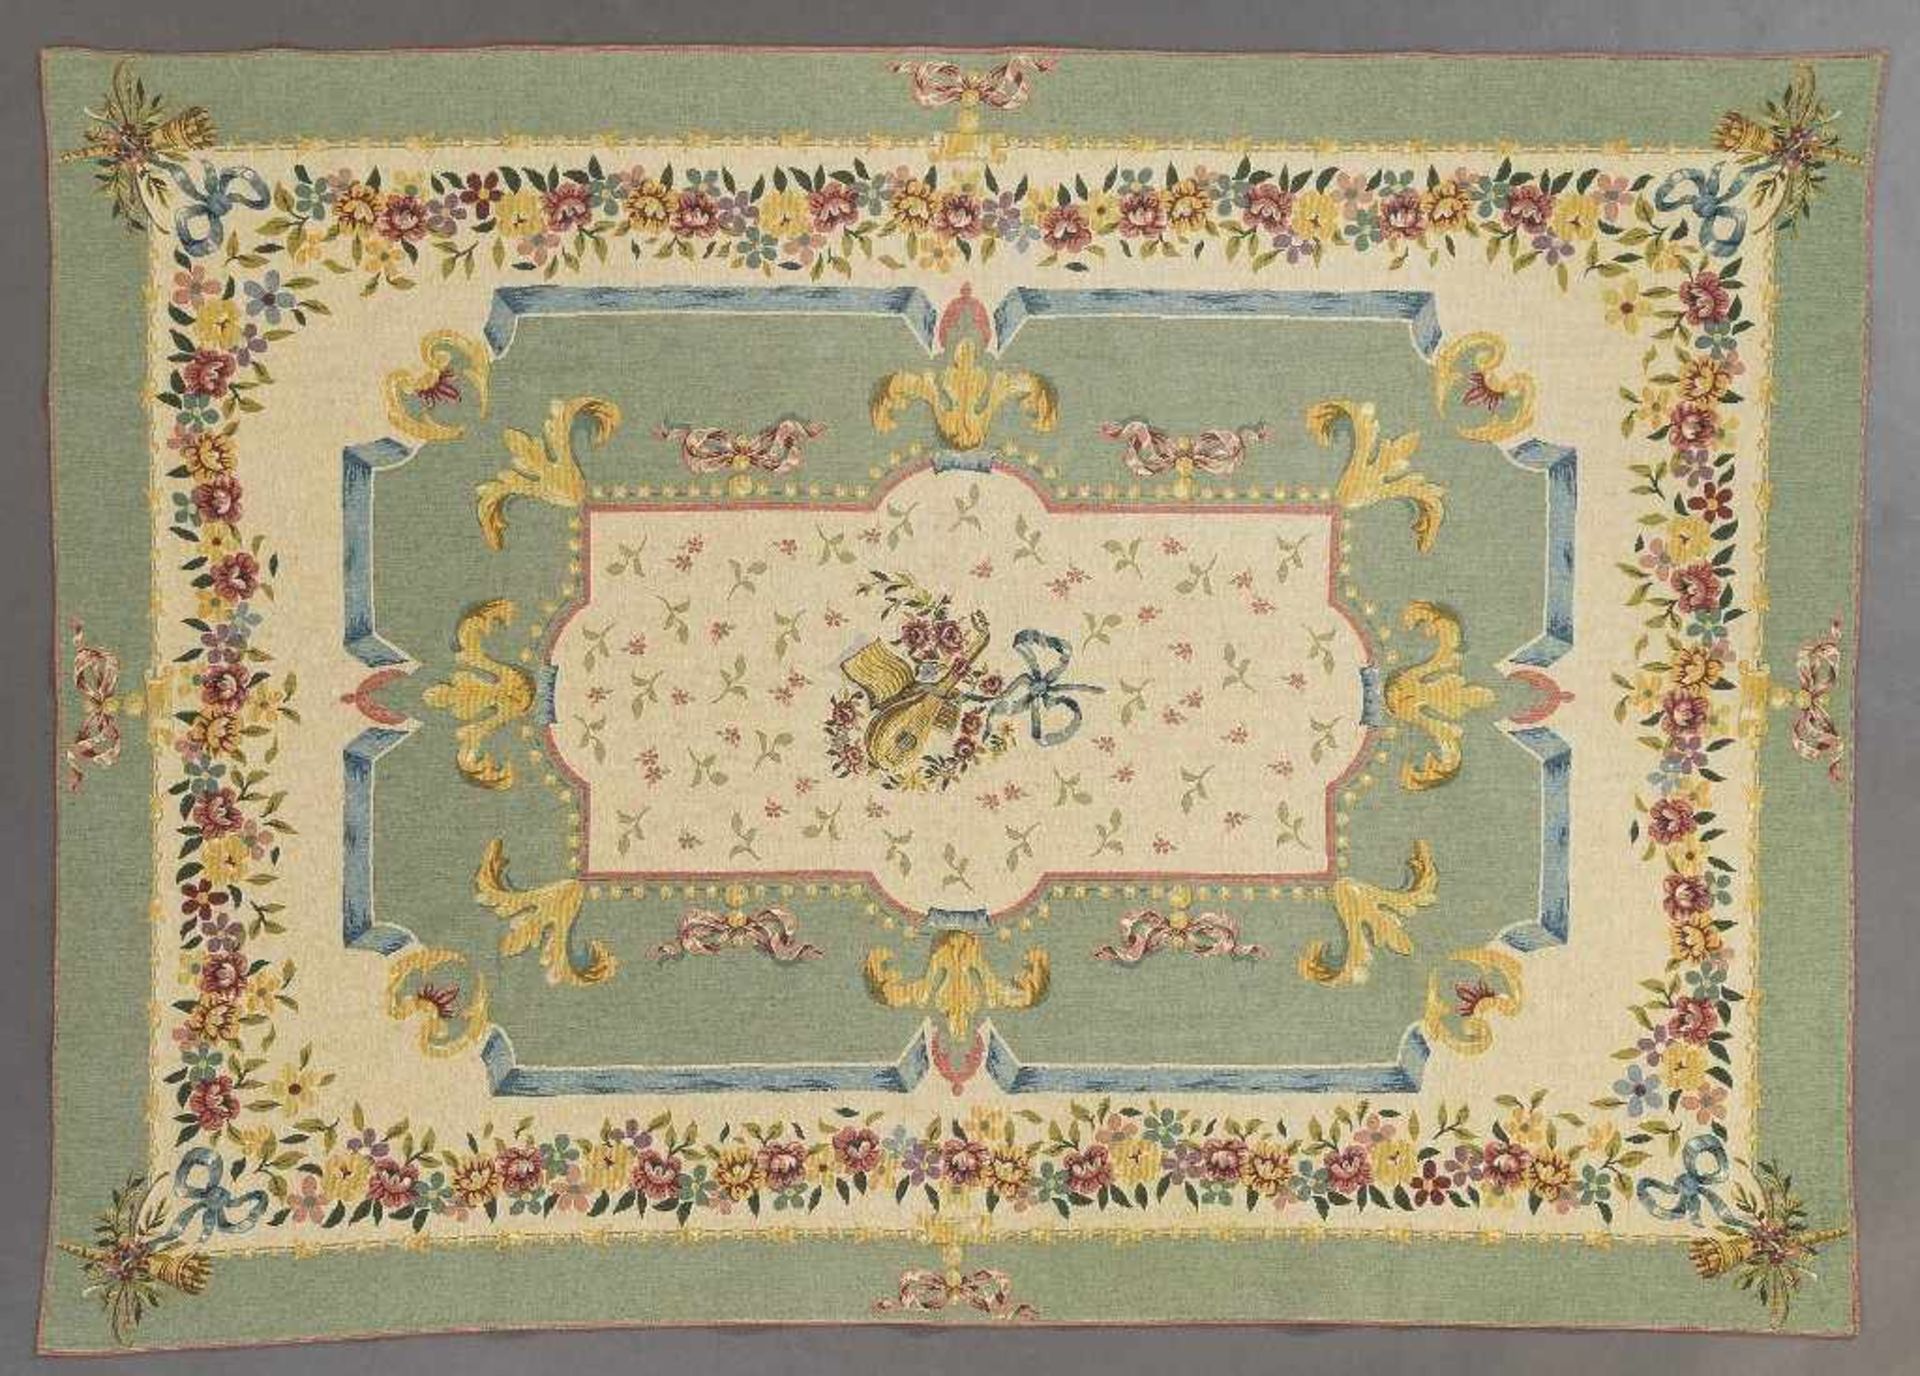 Wandbehang/Teppich im Aubusson-Stil. Herstelleretikett J. Pansu France. 190 x 140 cm